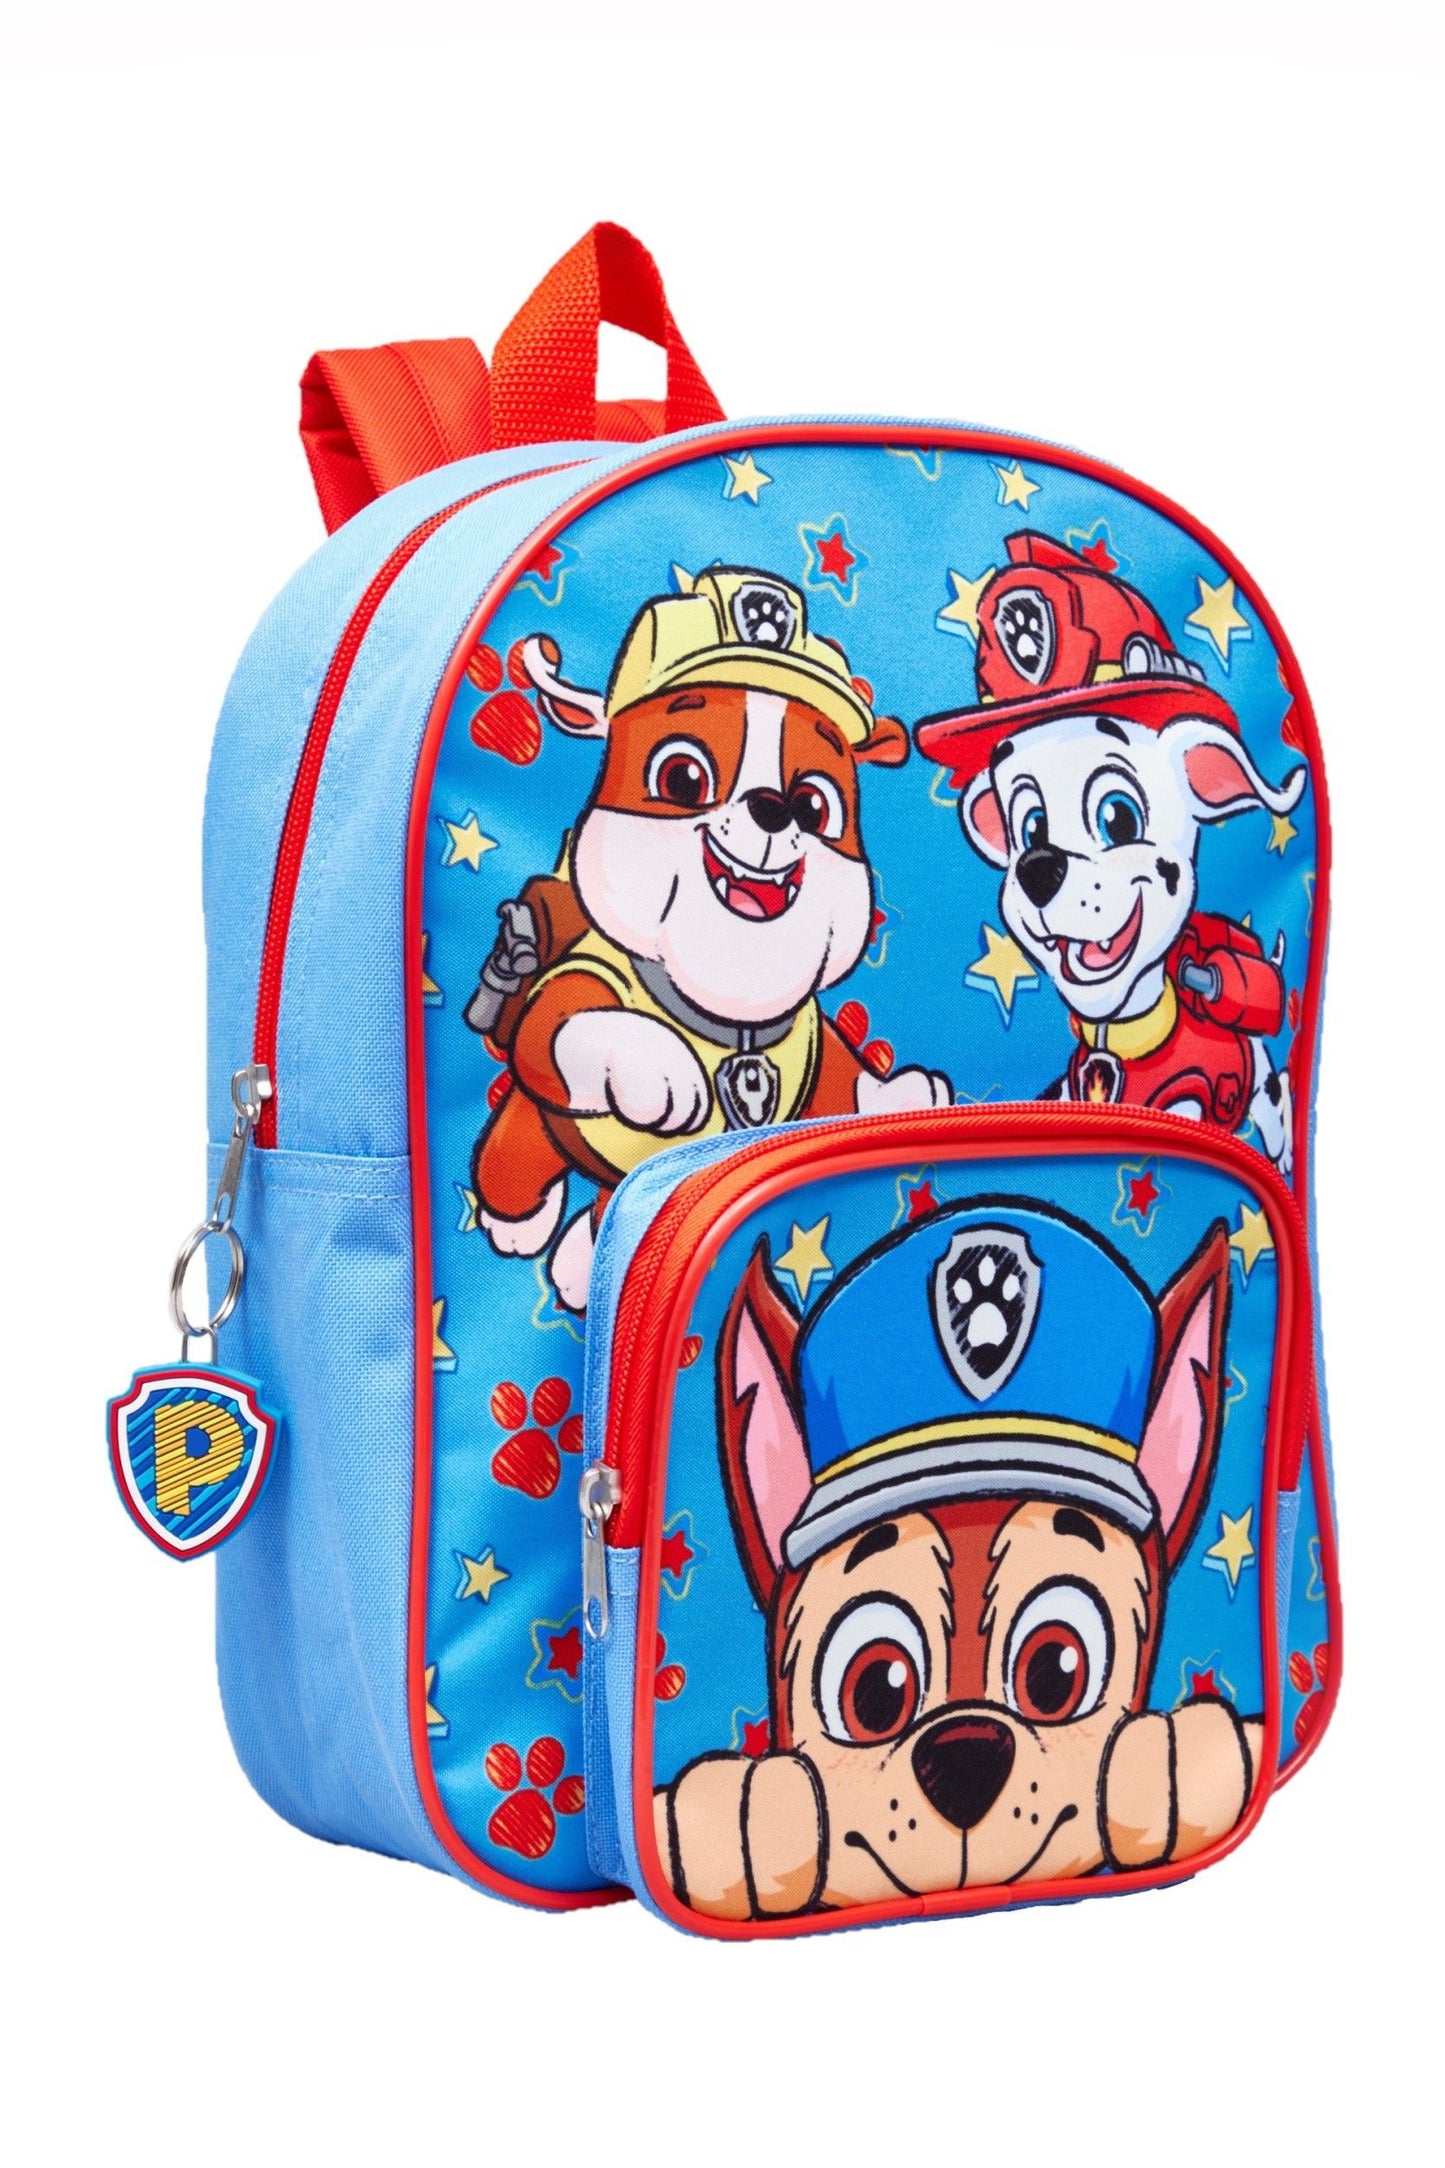 Paw Patrol Chase Marshall Rubble Children's Backpack Rucksack School Bag